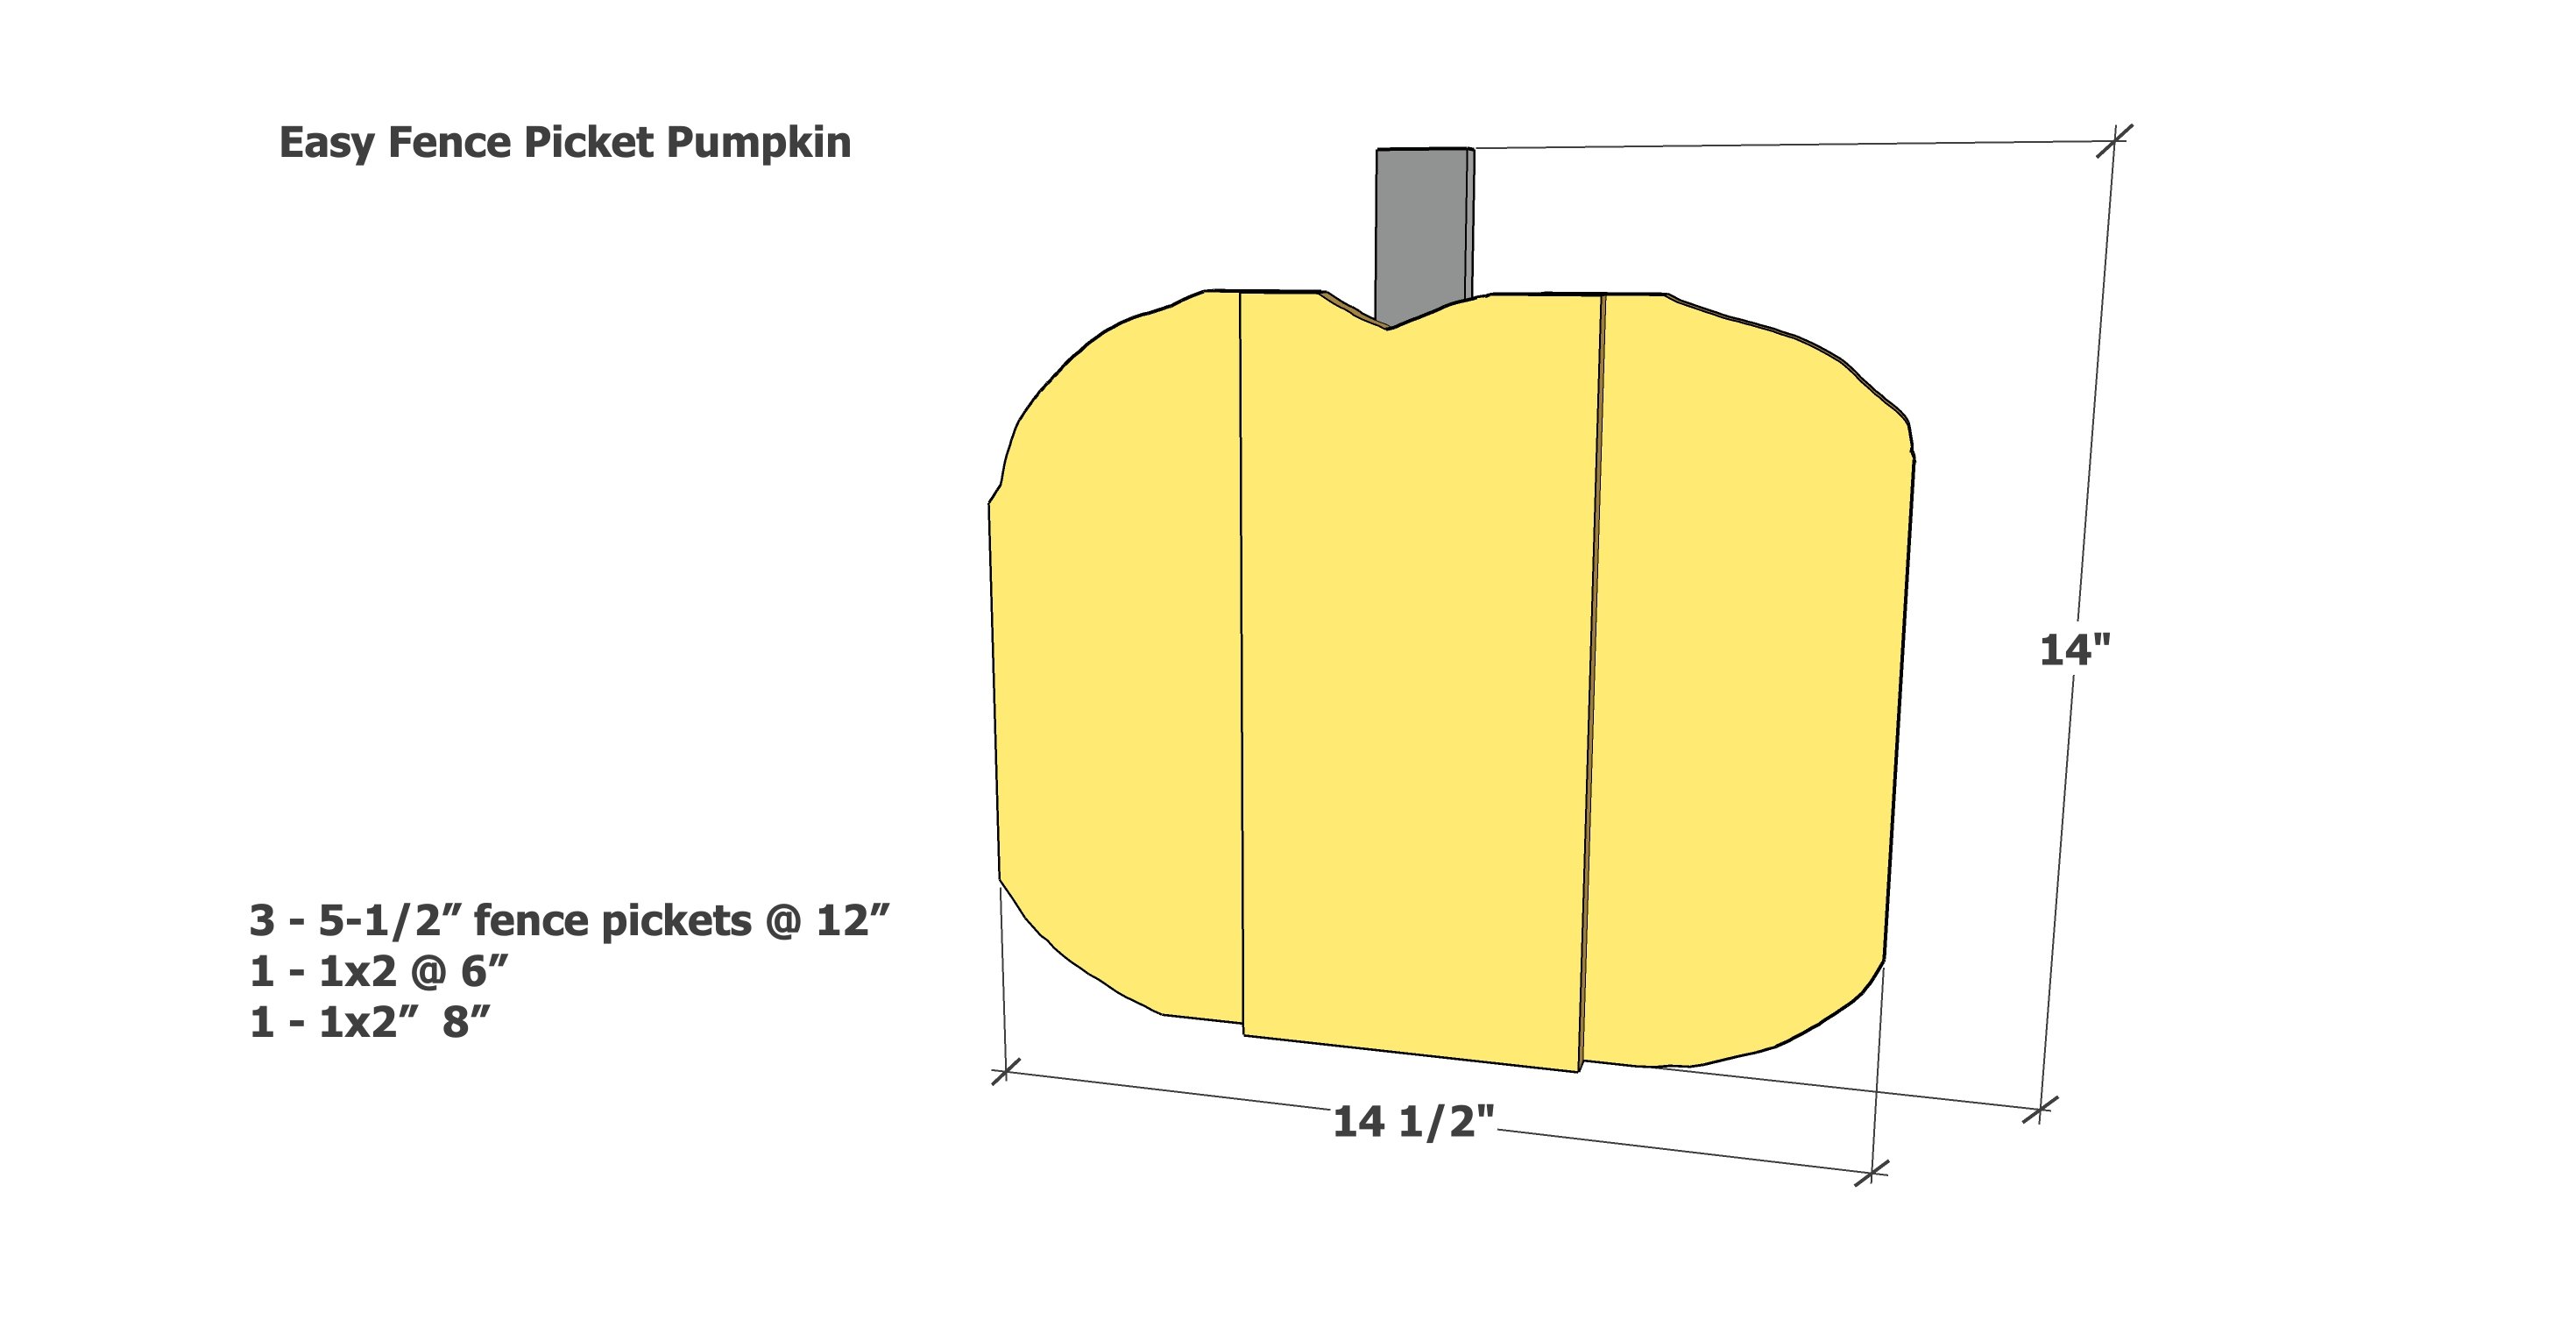 Wood pumpkin dimensions